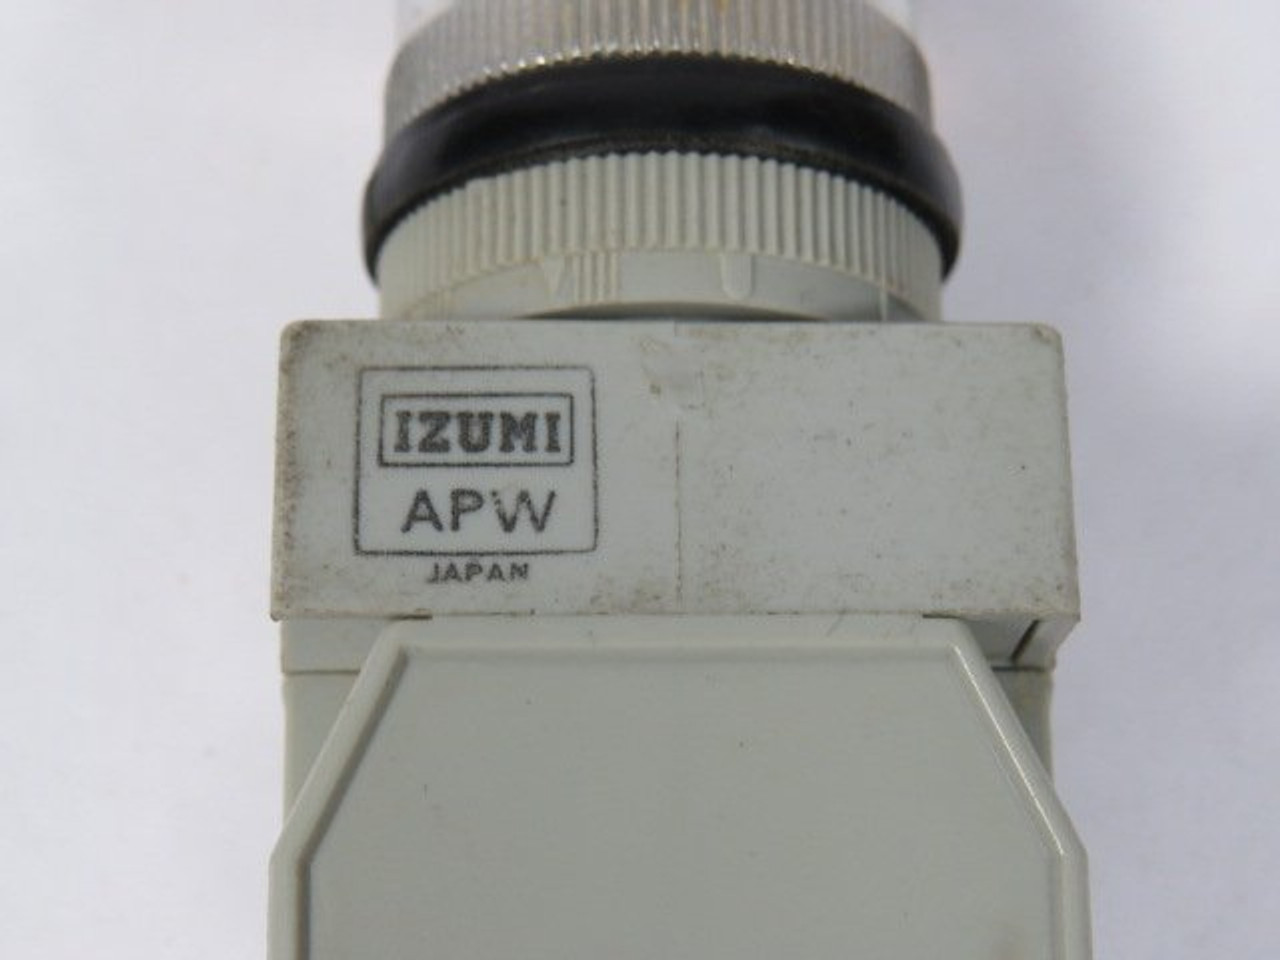 Izumi APW126DY Yellow Pilot Light 200/220V 50/60HZ USED